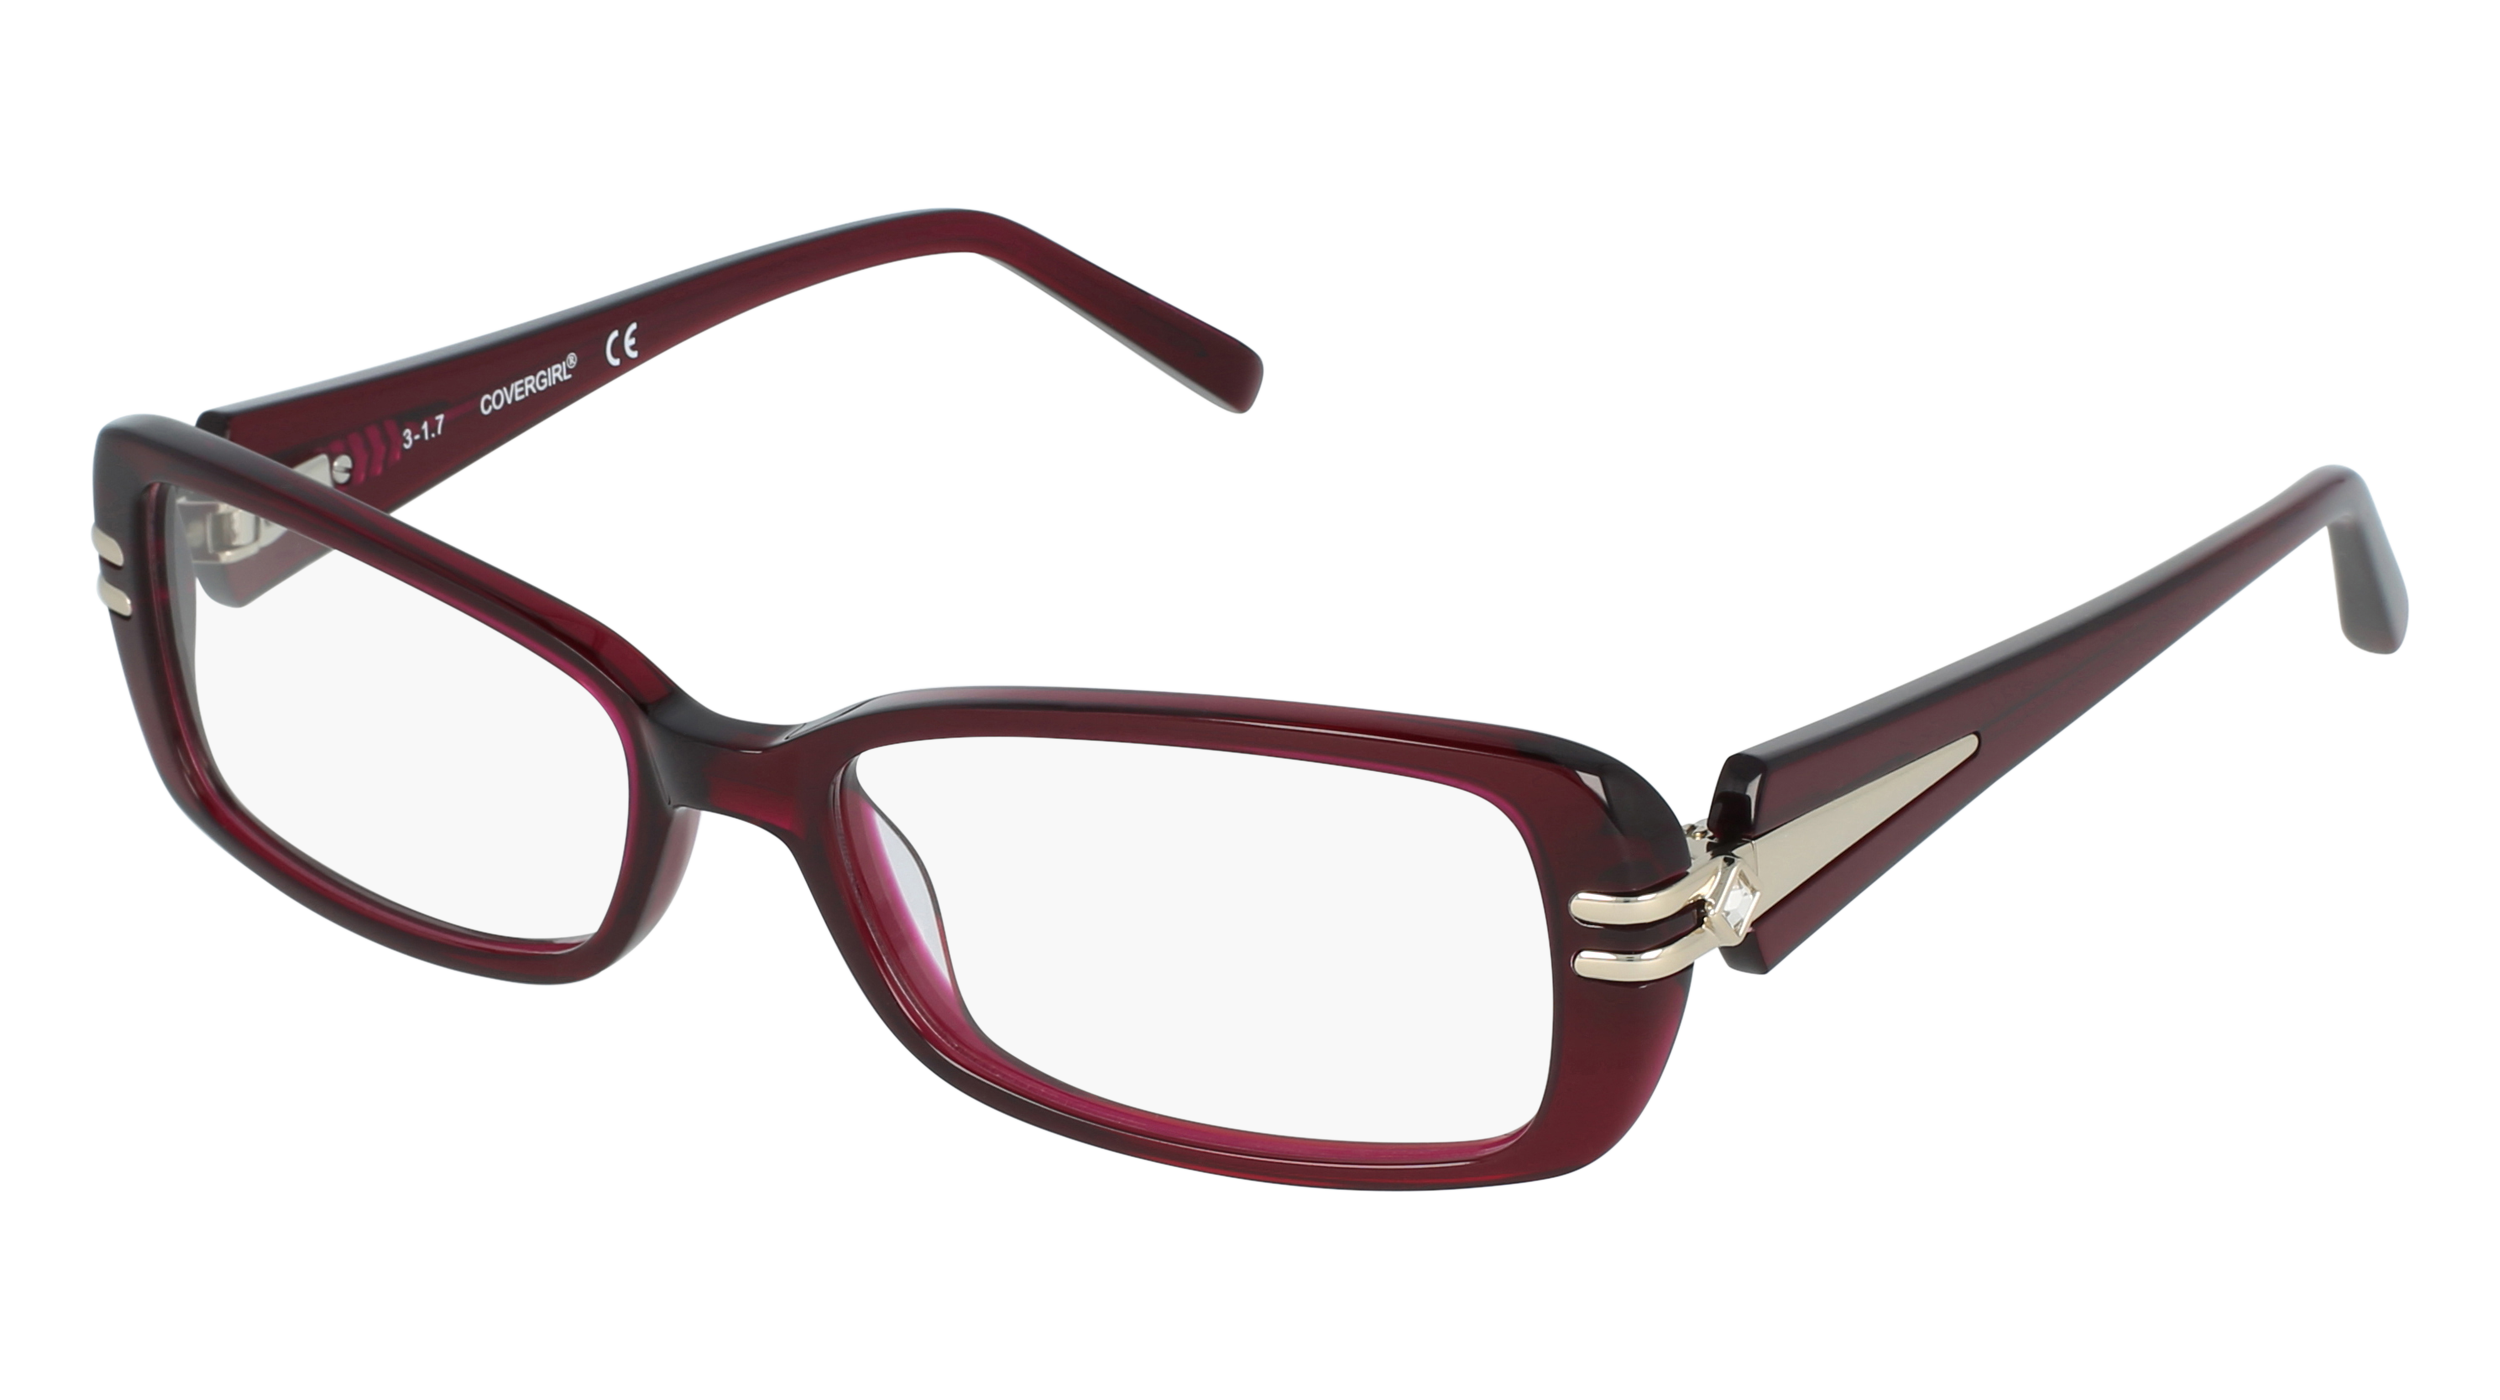 C CG0451 women's eyeglasses (from the side)